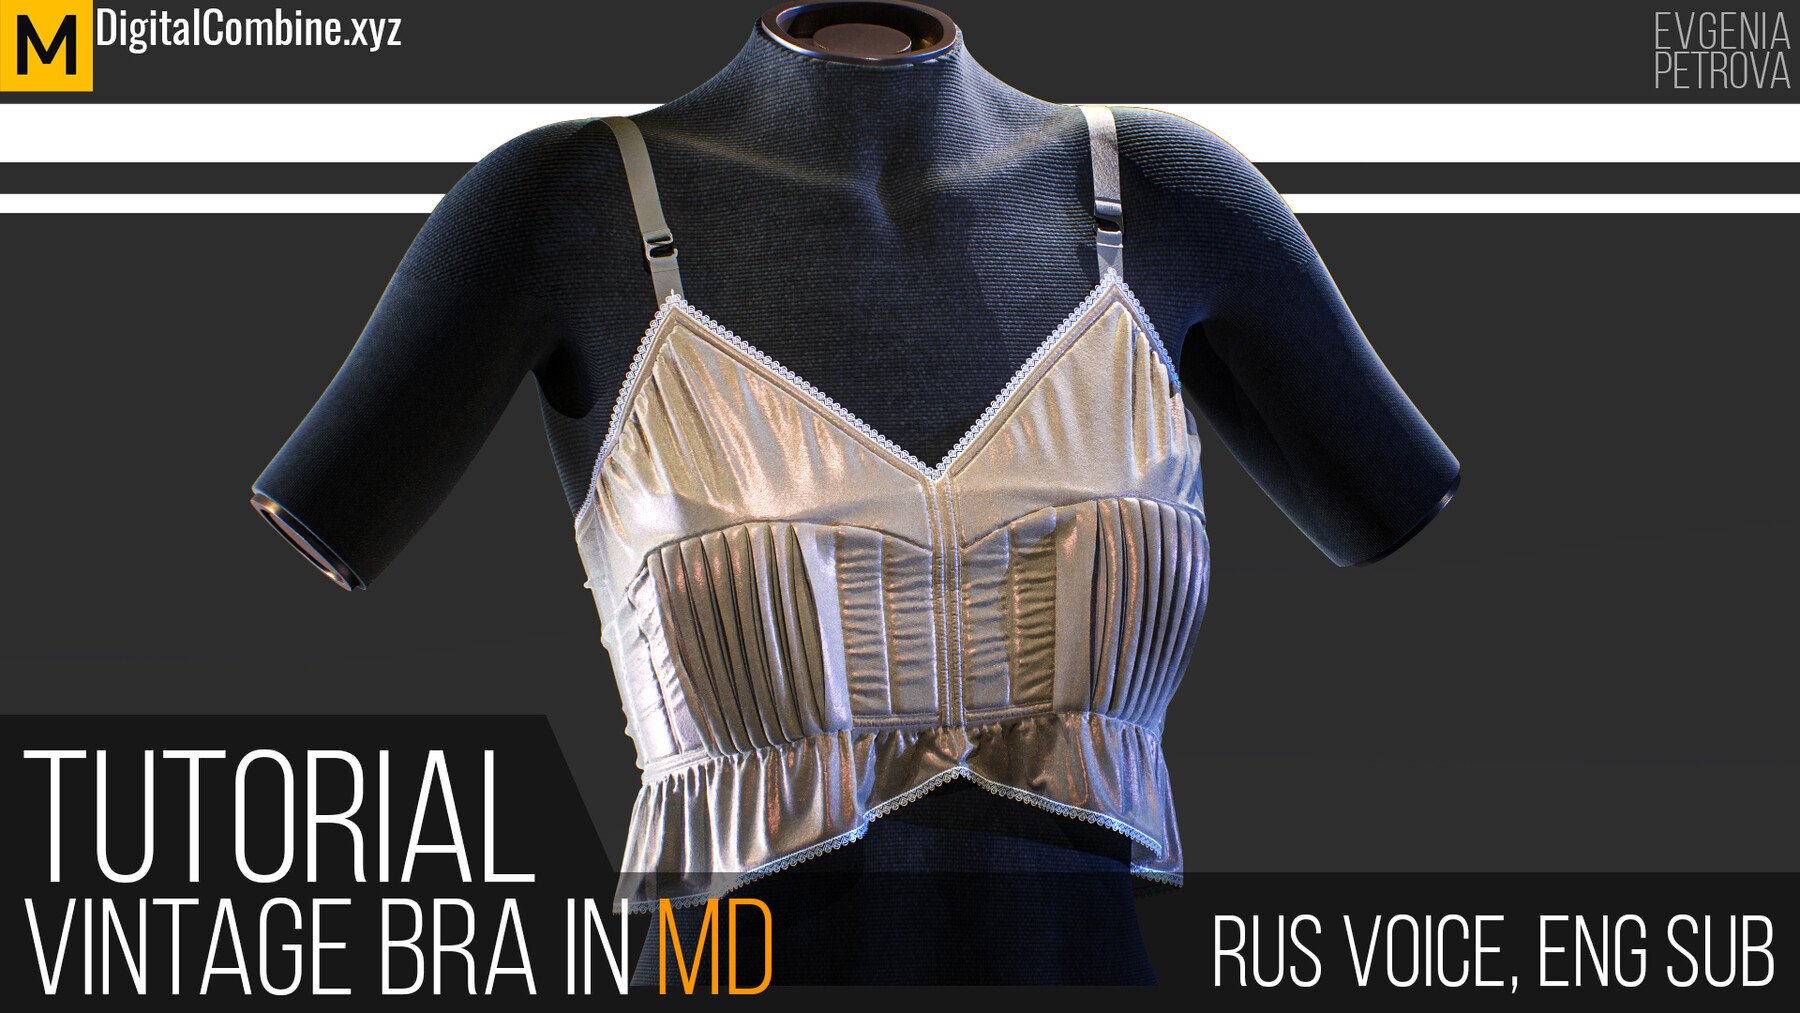 Vintage bra in Marvelous designer